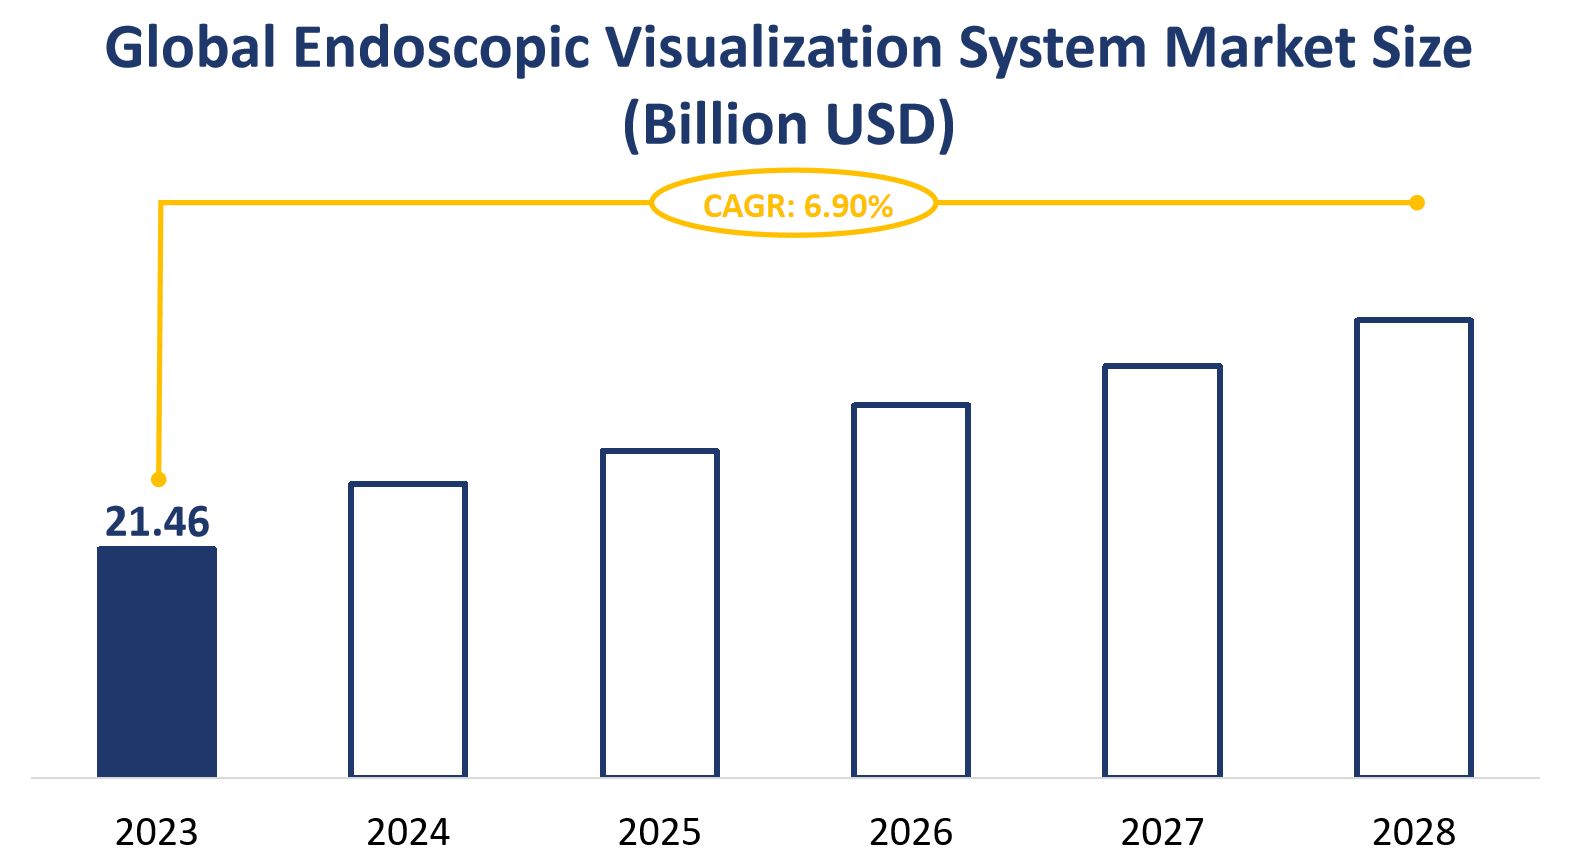 Global Endoscopic Visualization System Market Size (Billion USD)